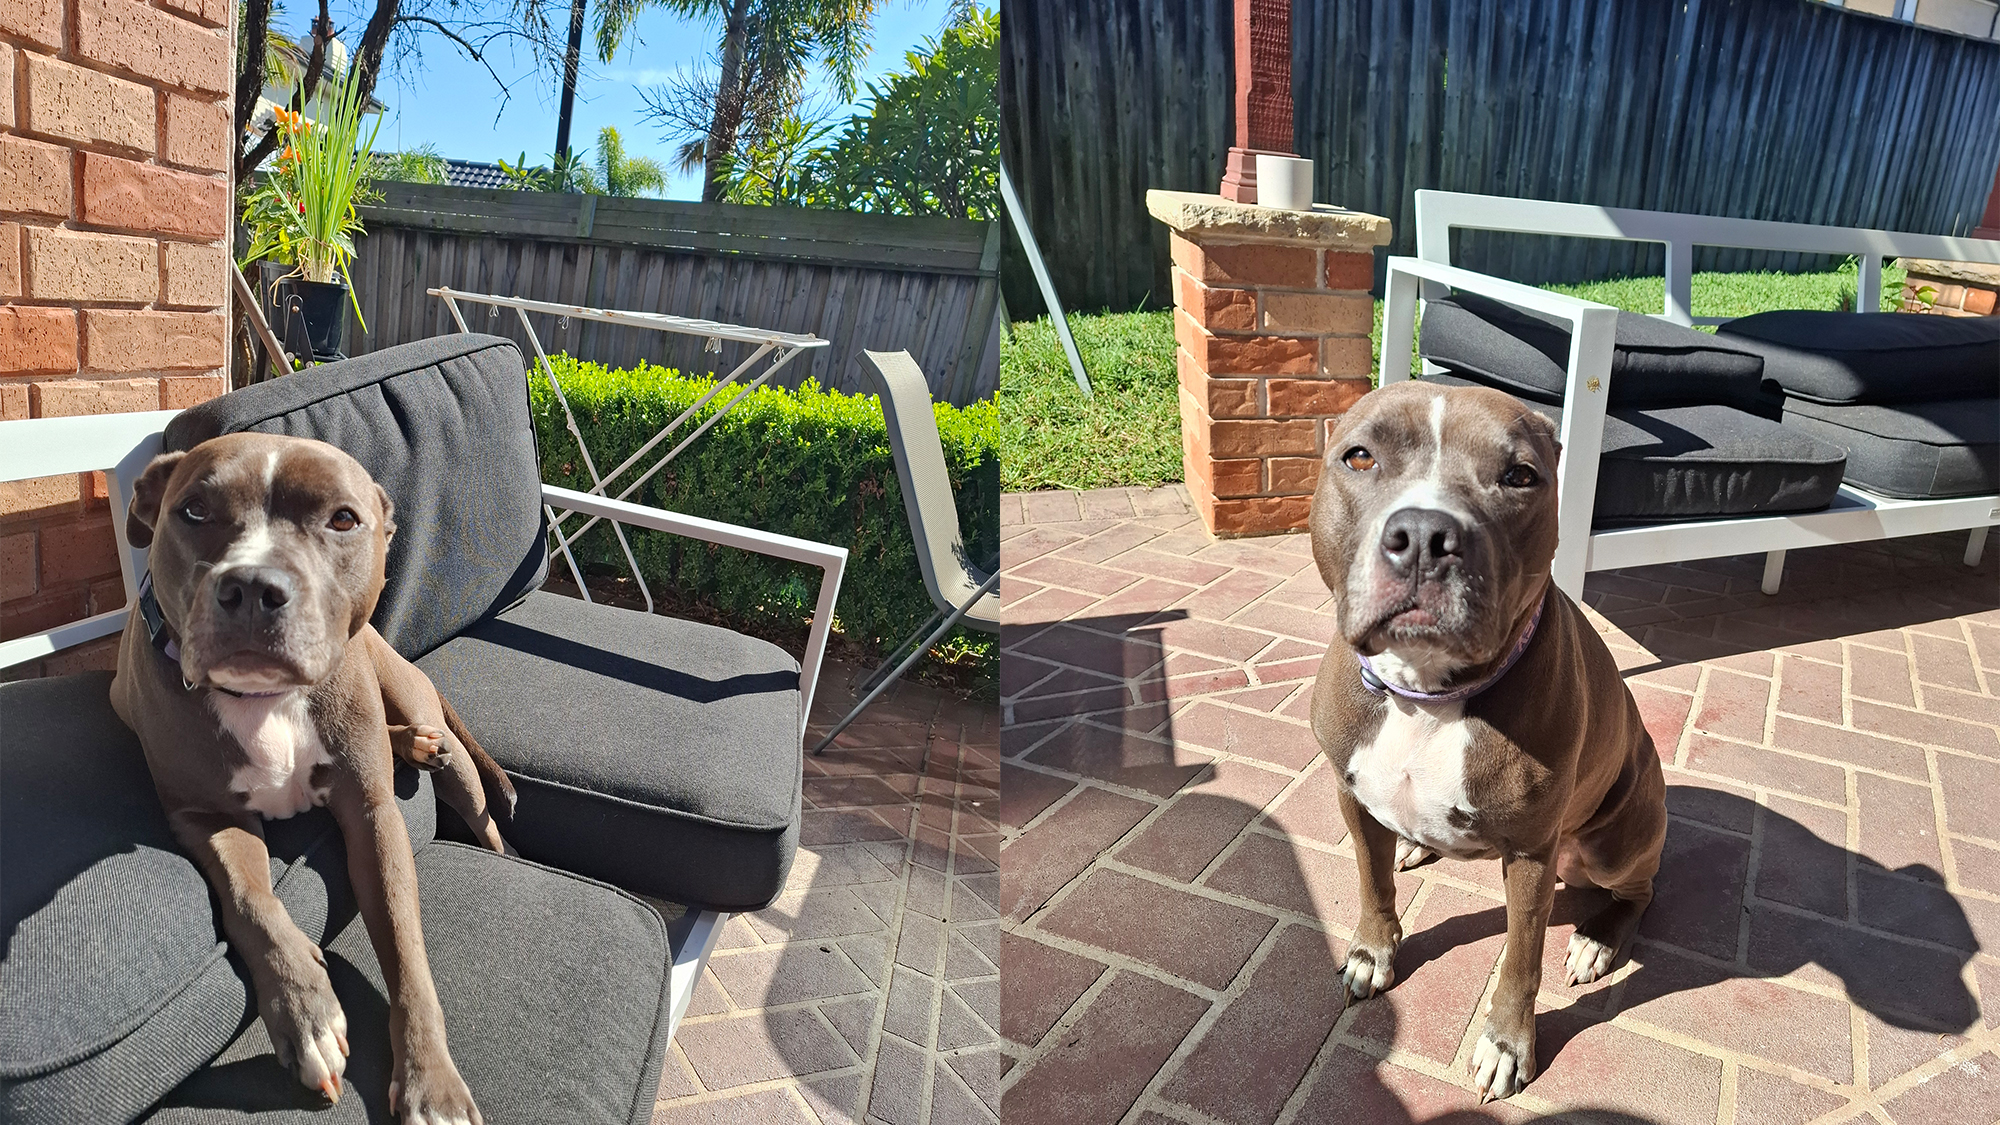 Photos of my sun-loving doggo